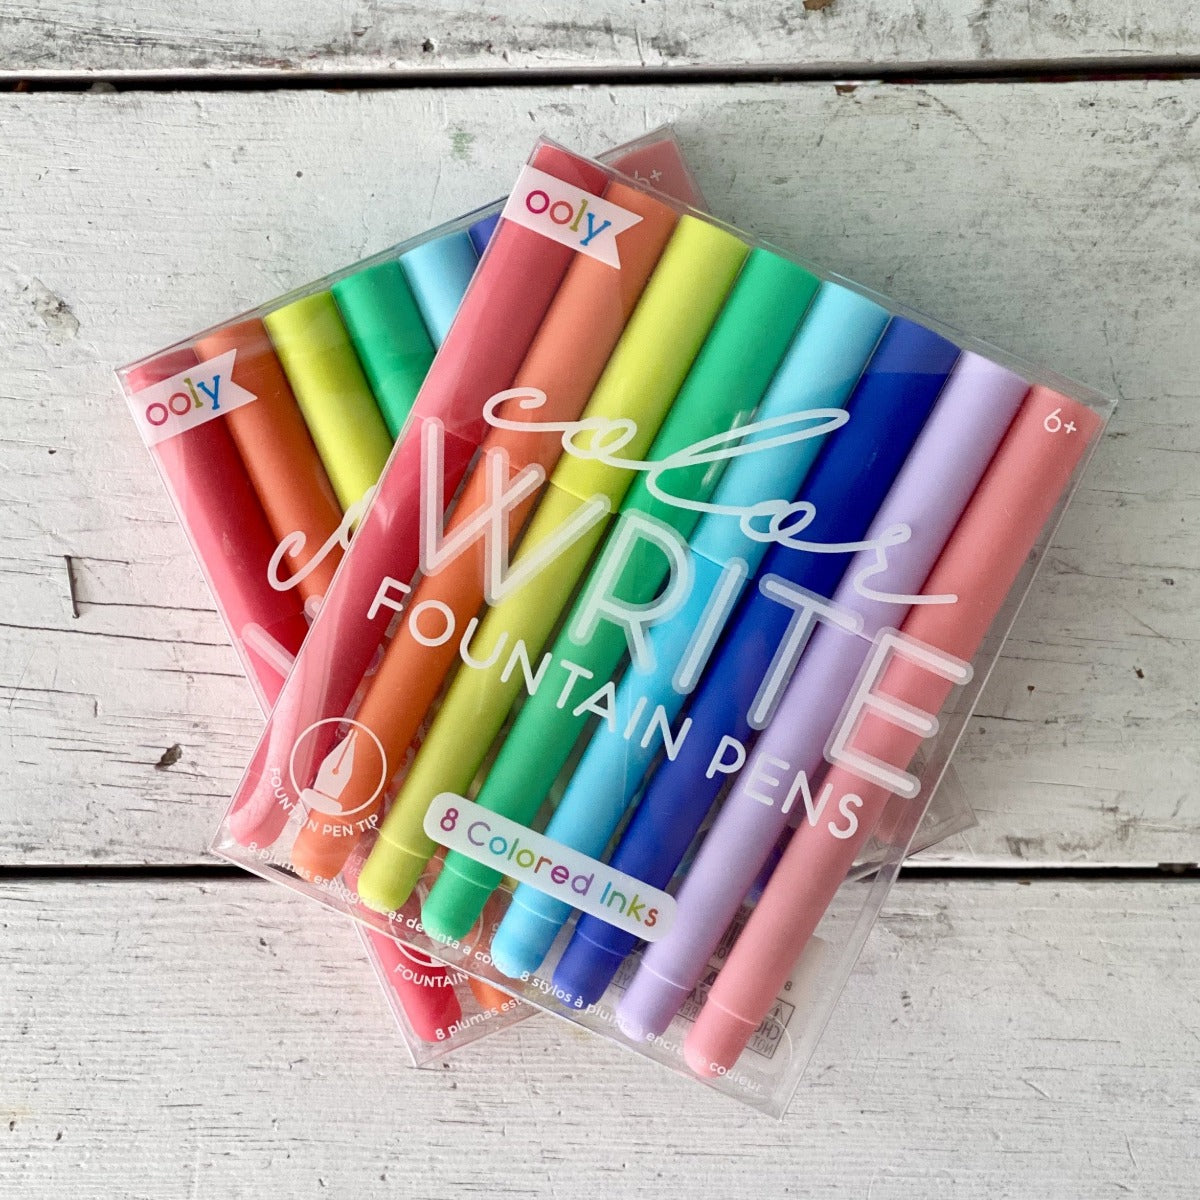 Rainbow pen - Tinou (6 colors) - Writing accessories - Writing